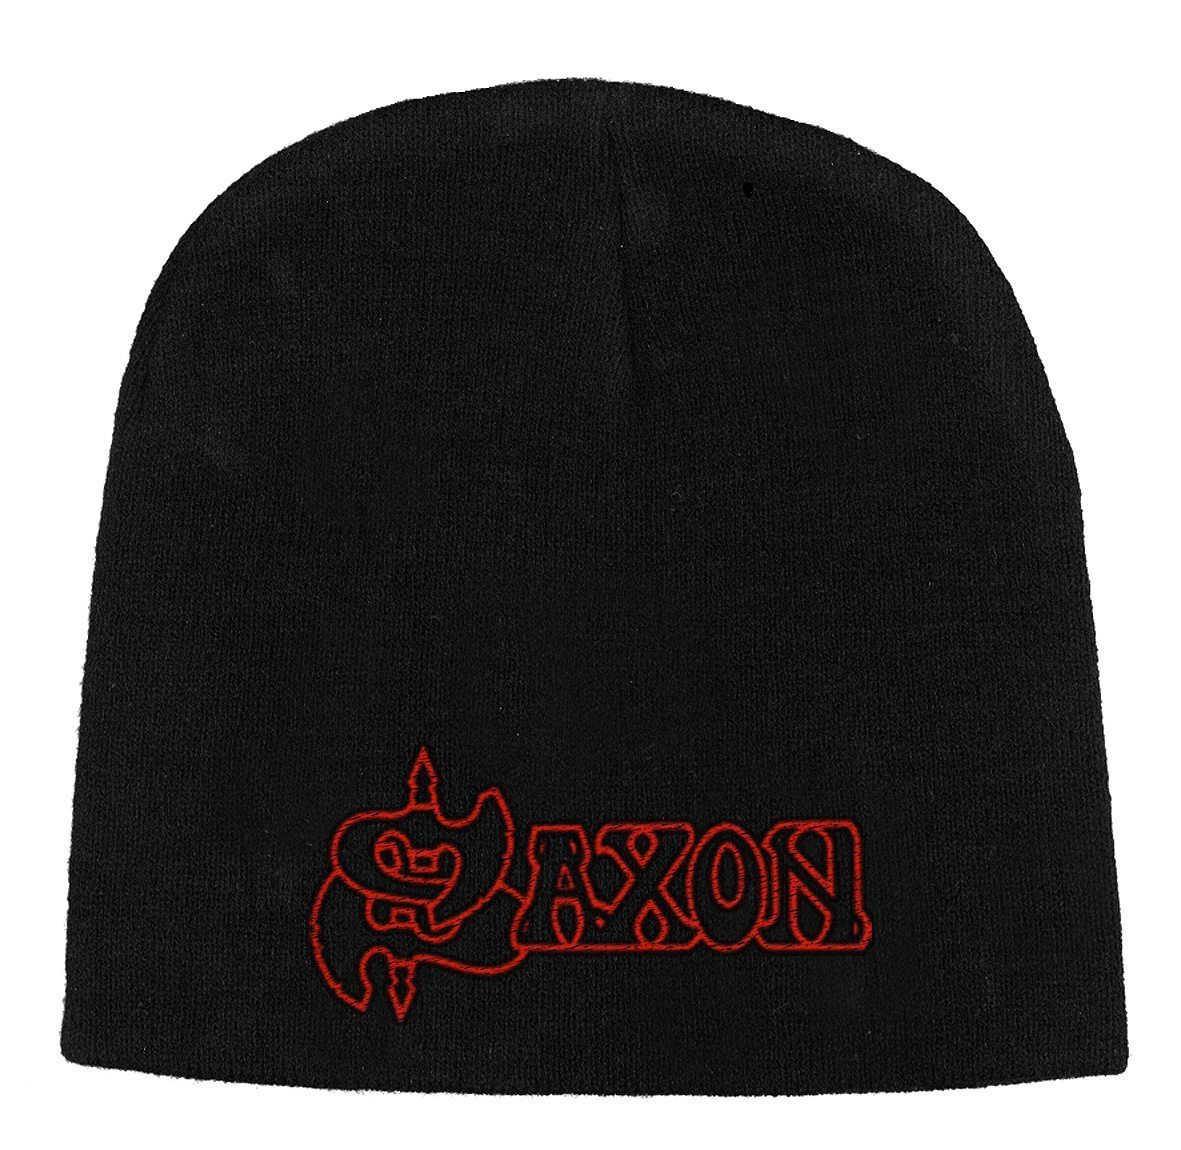 Saxon Beanie Hat Logo